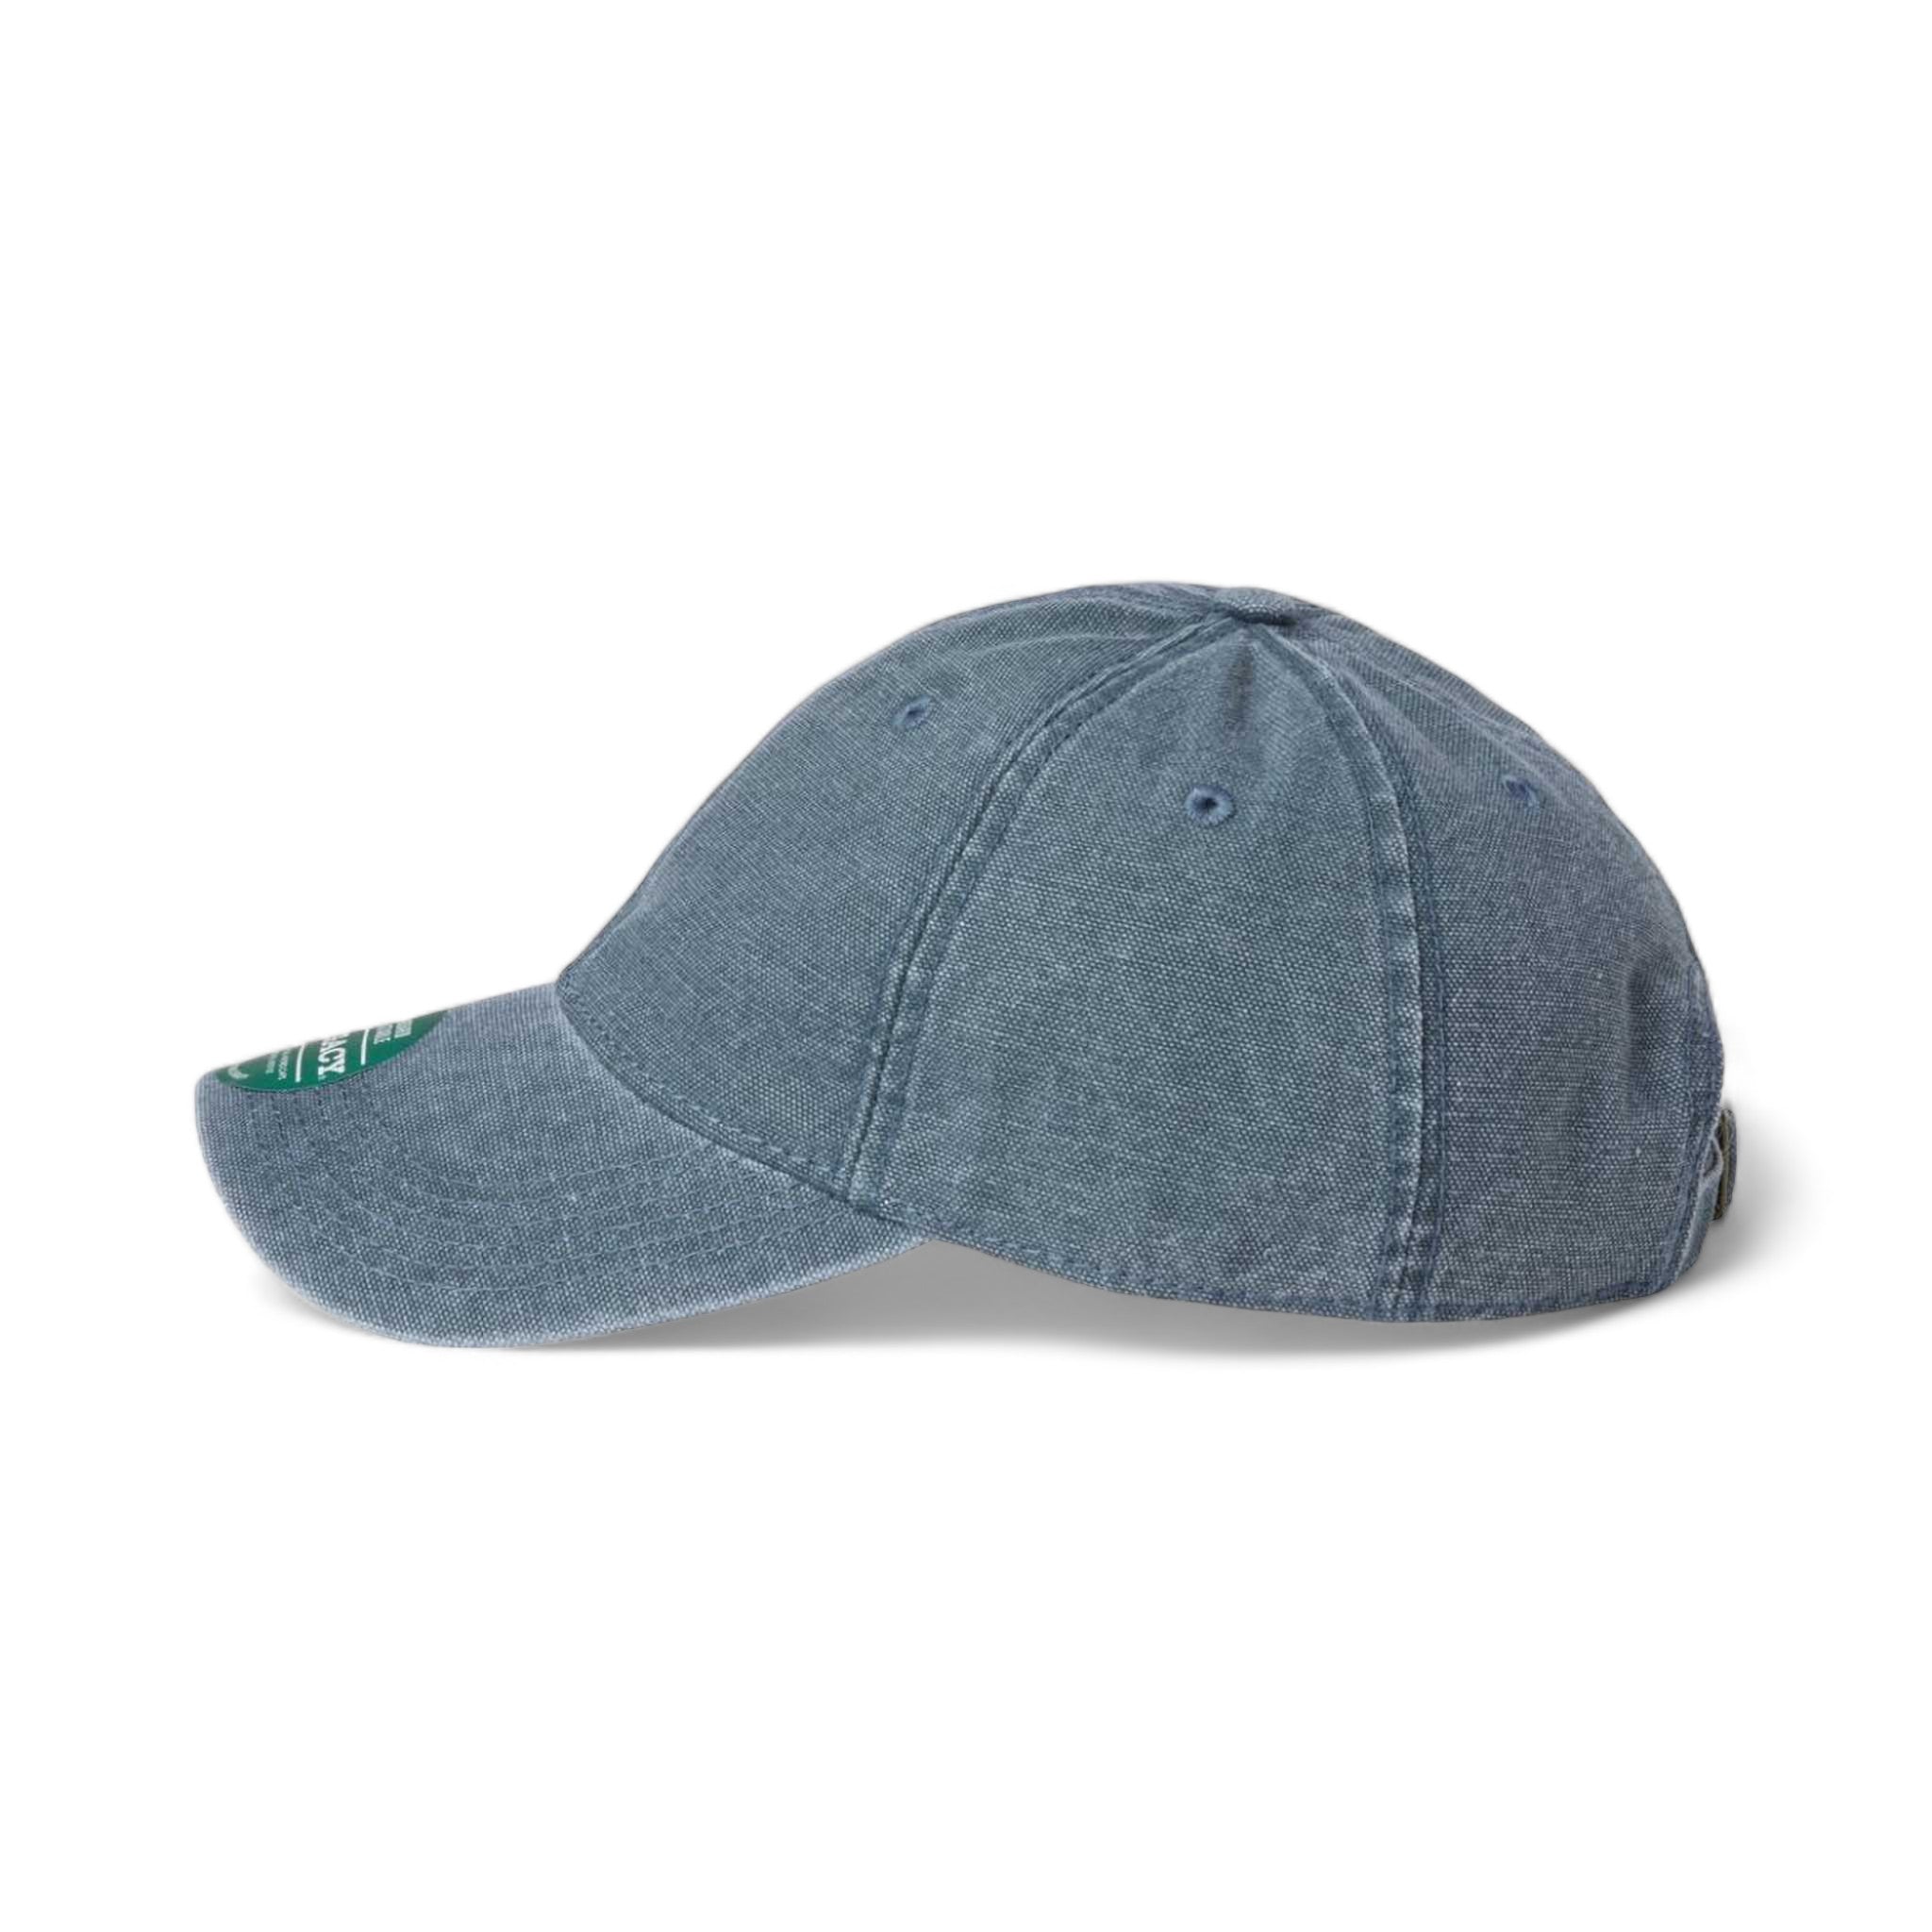 Side view of LEGACY DTAST custom hat in blue steel